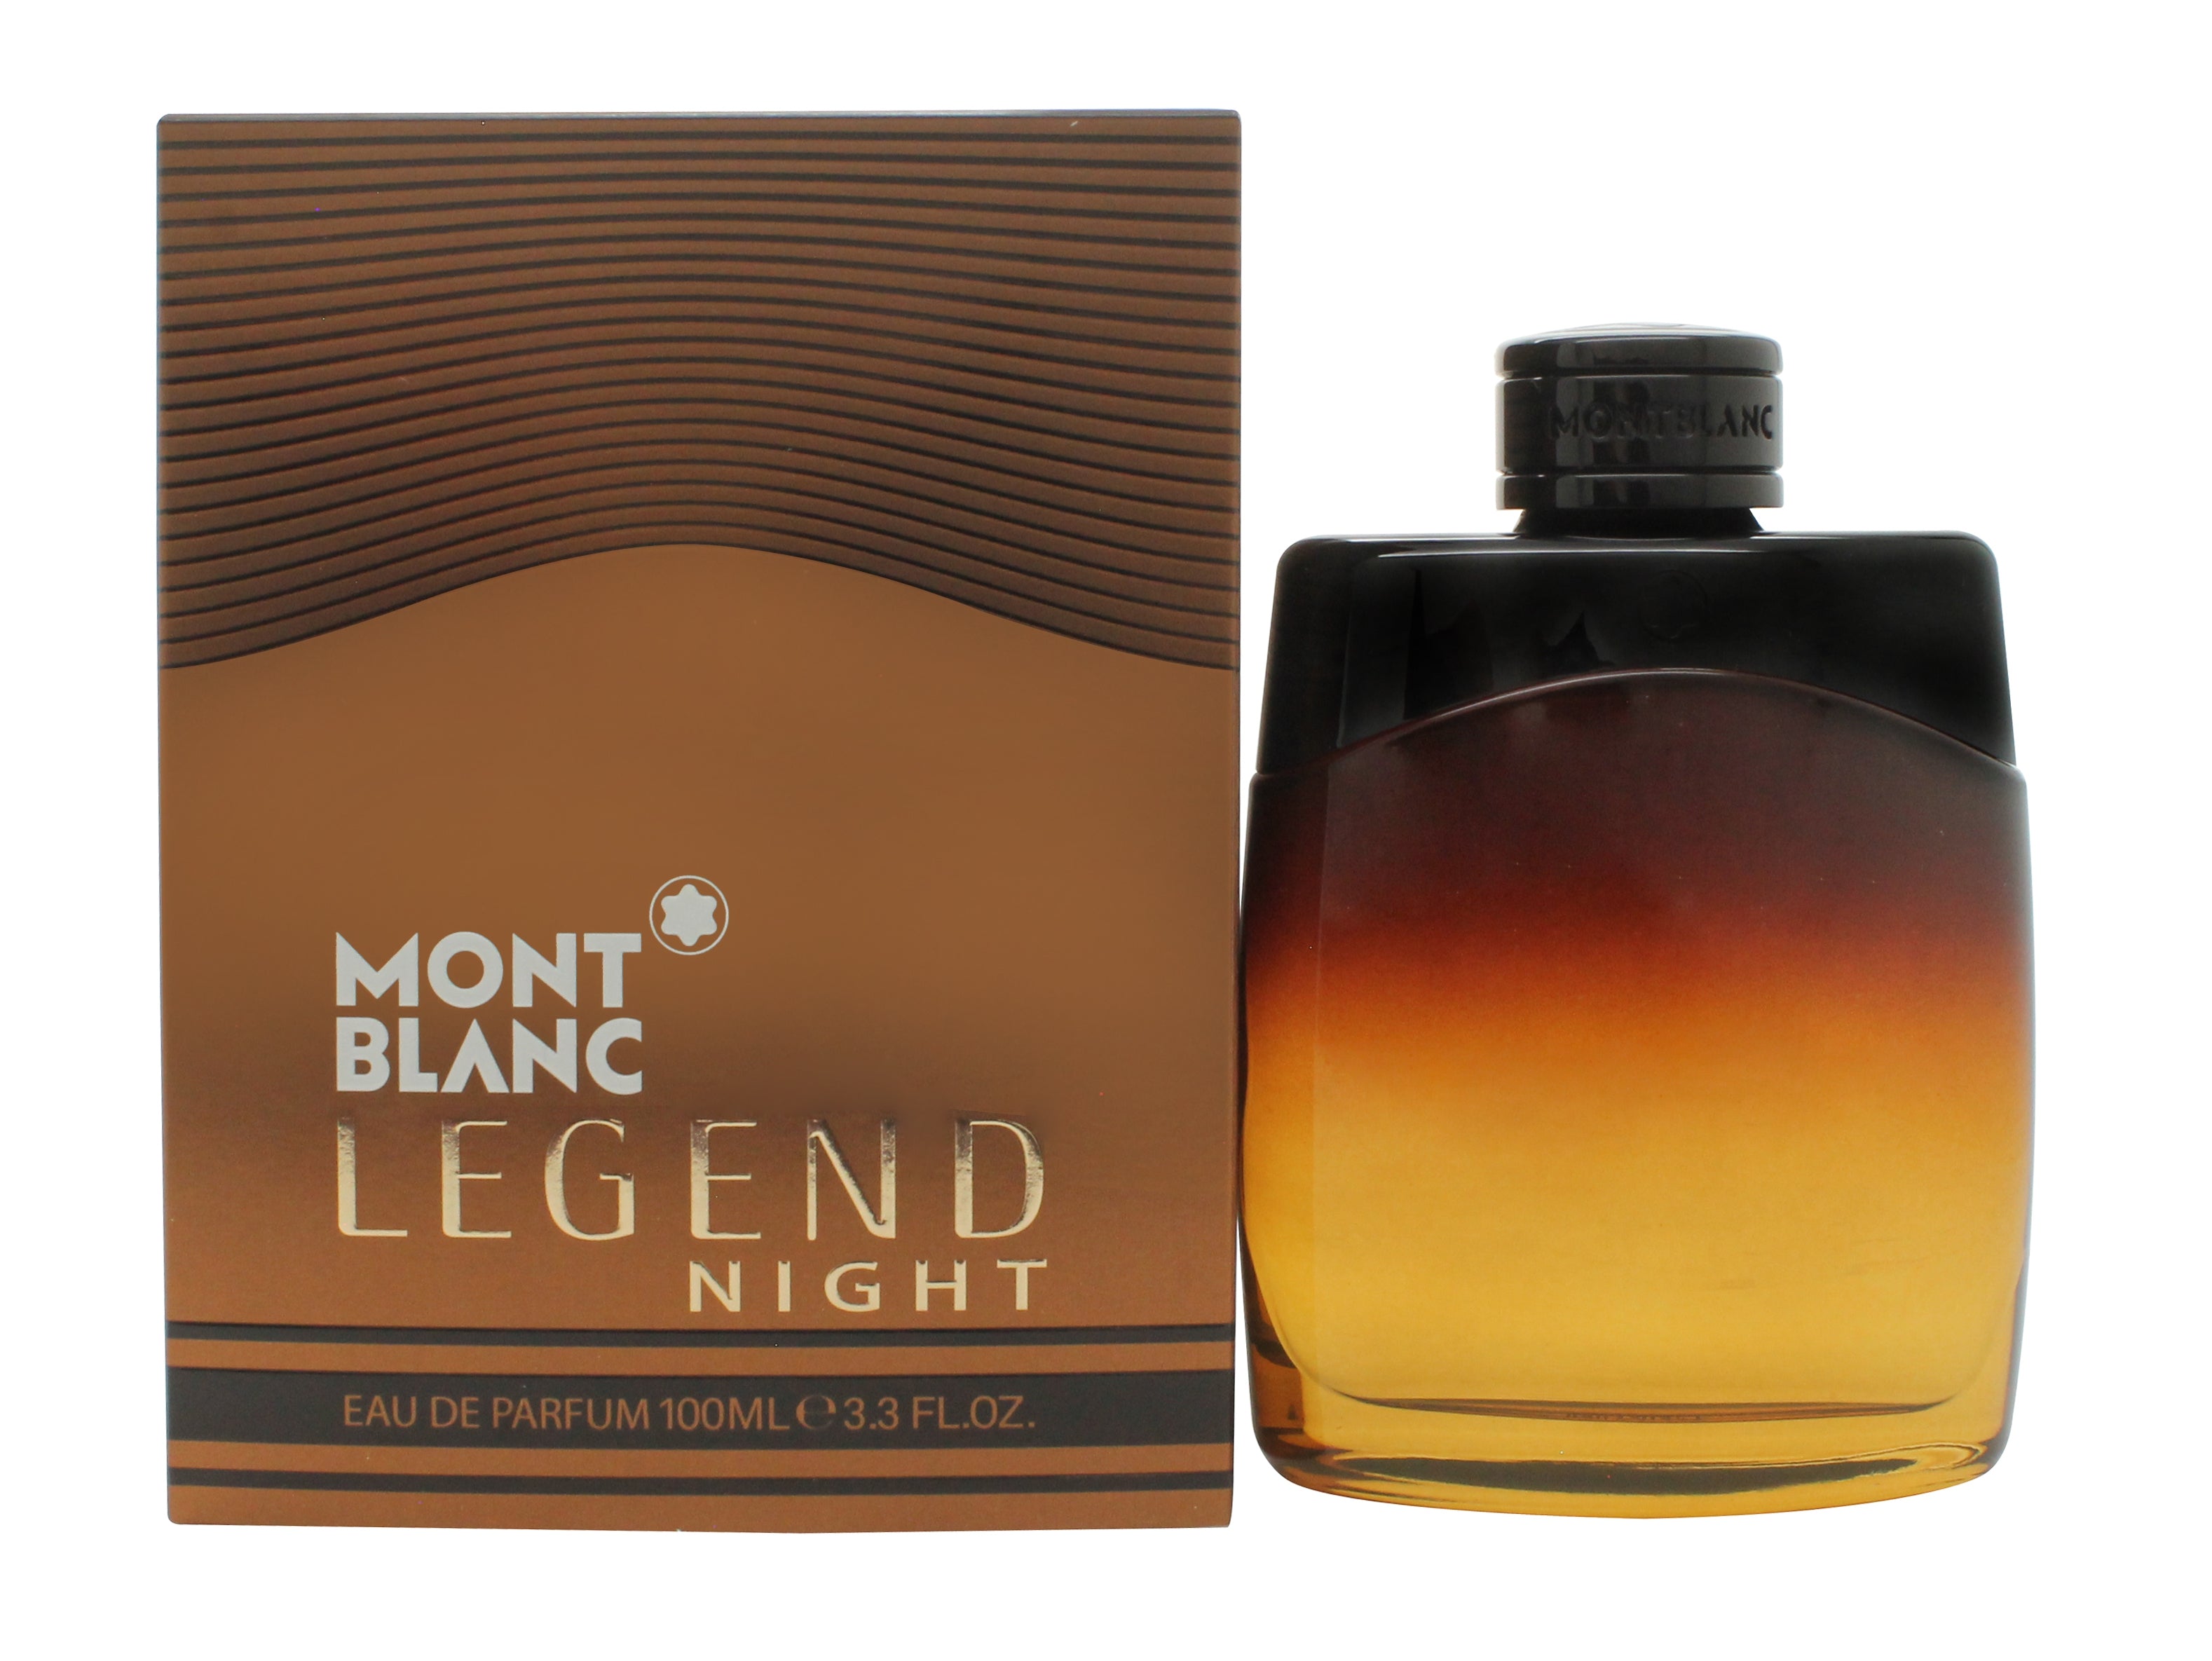 View Mont Blanc Legend Night Eau de Parfum 100ml Spray information